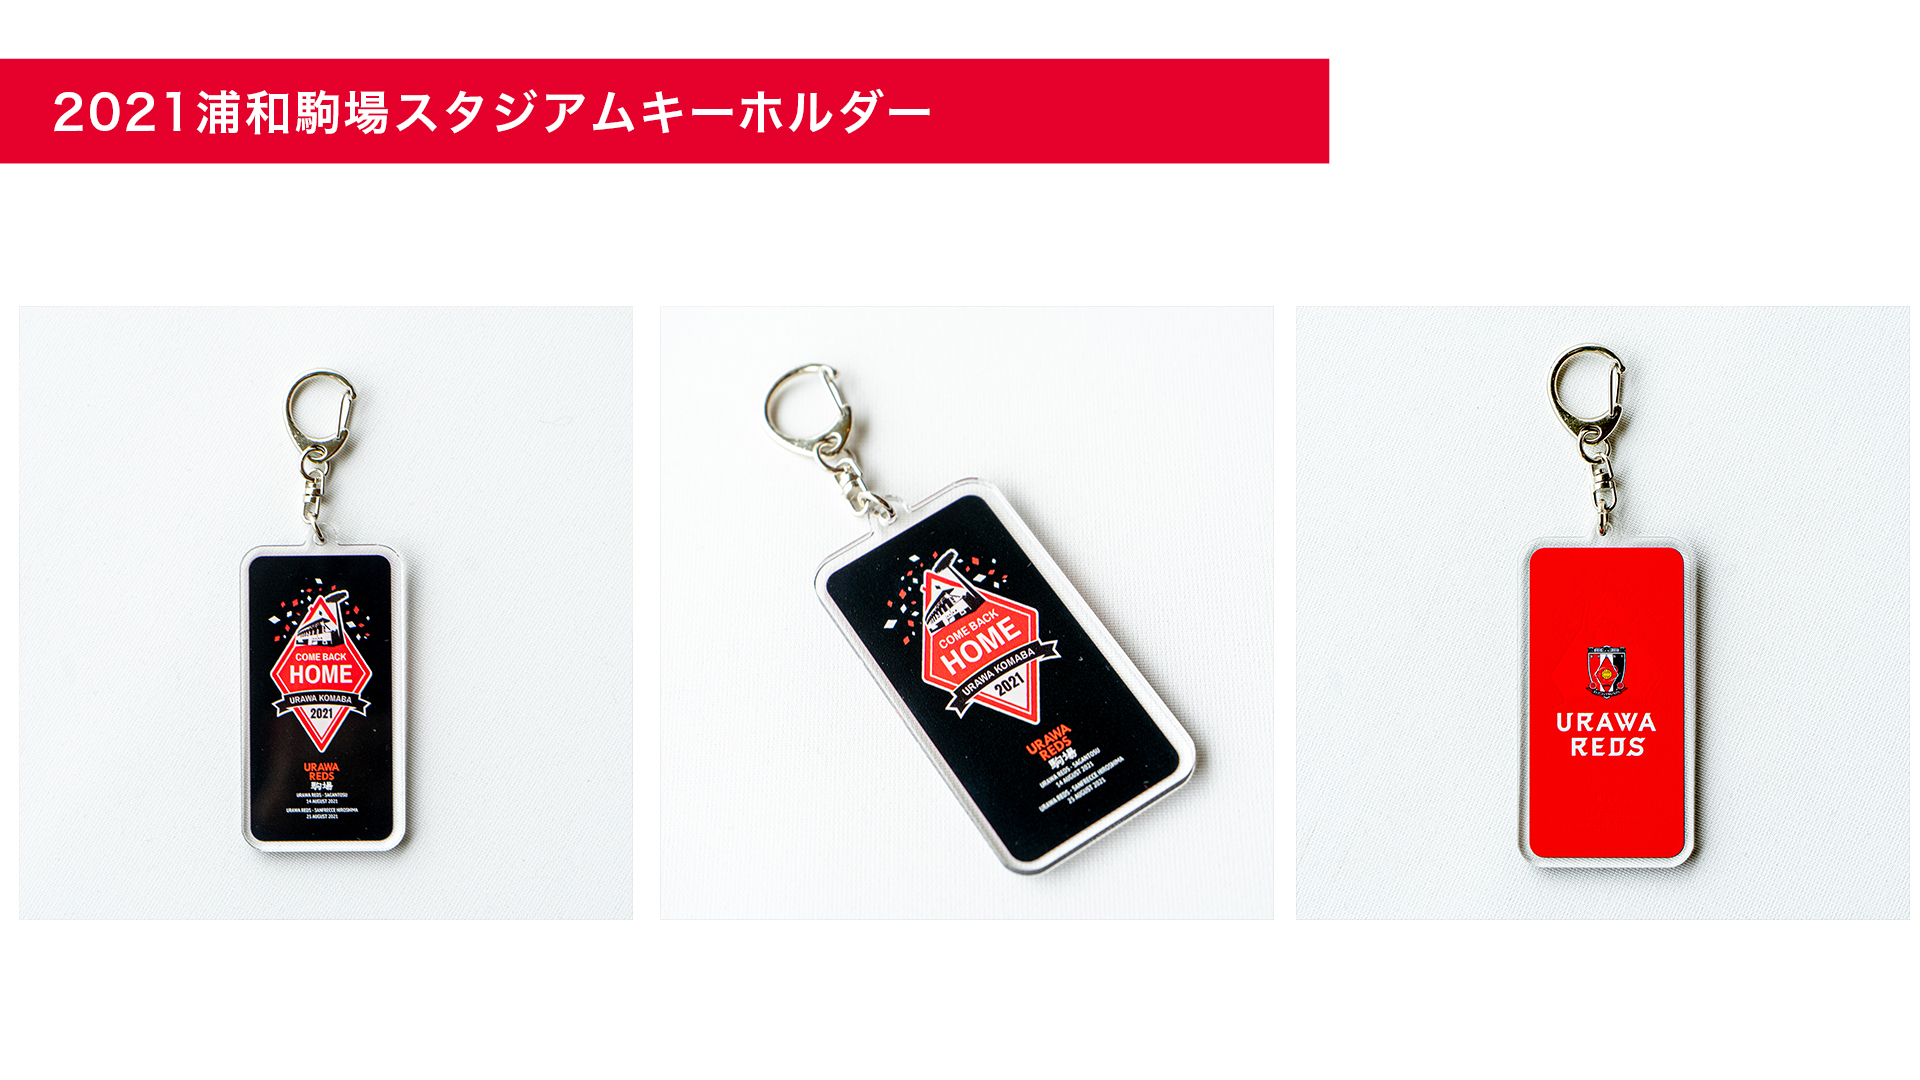 8 14 土 浦和駒場開催記念 Come Back Home グッズ発売 Urawa Red Diamonds Official Website